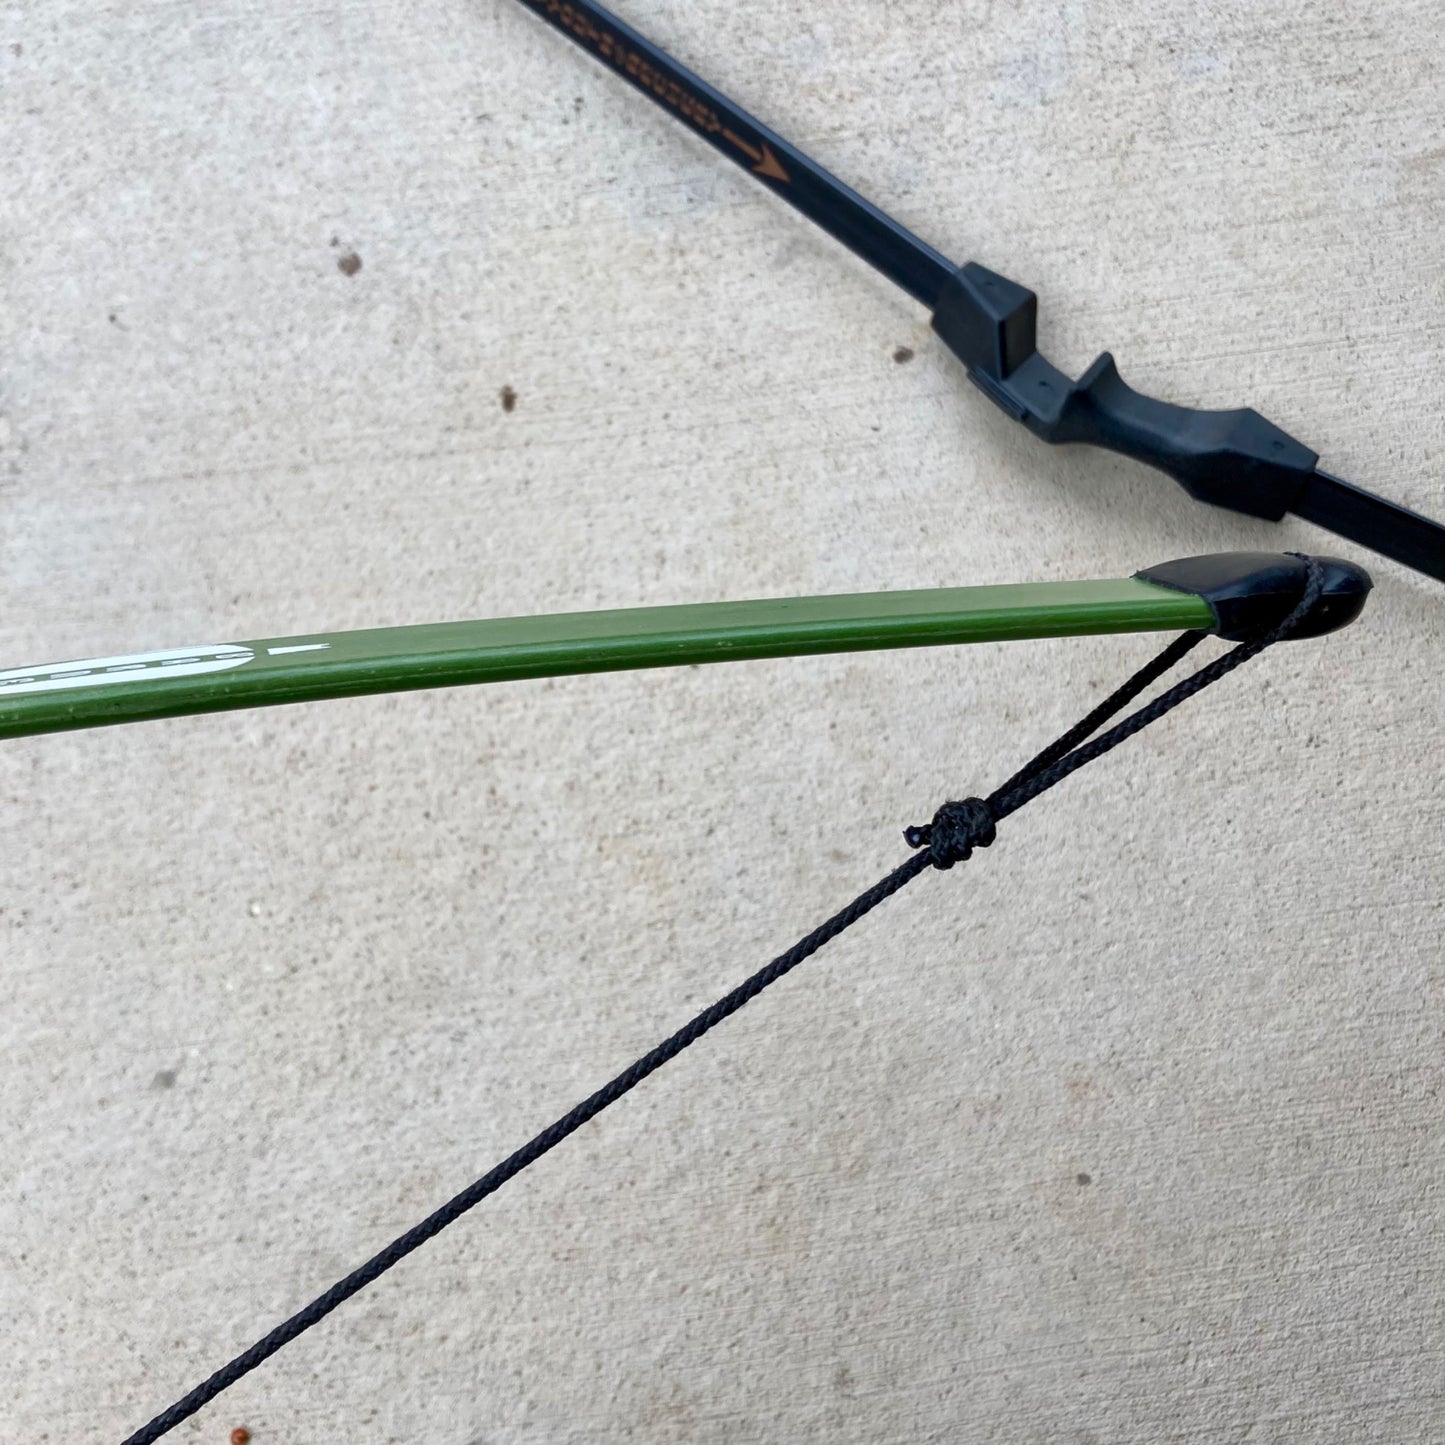 Lot 2 Barnett Youth Archery Bows Fiberglass Black Green 48"